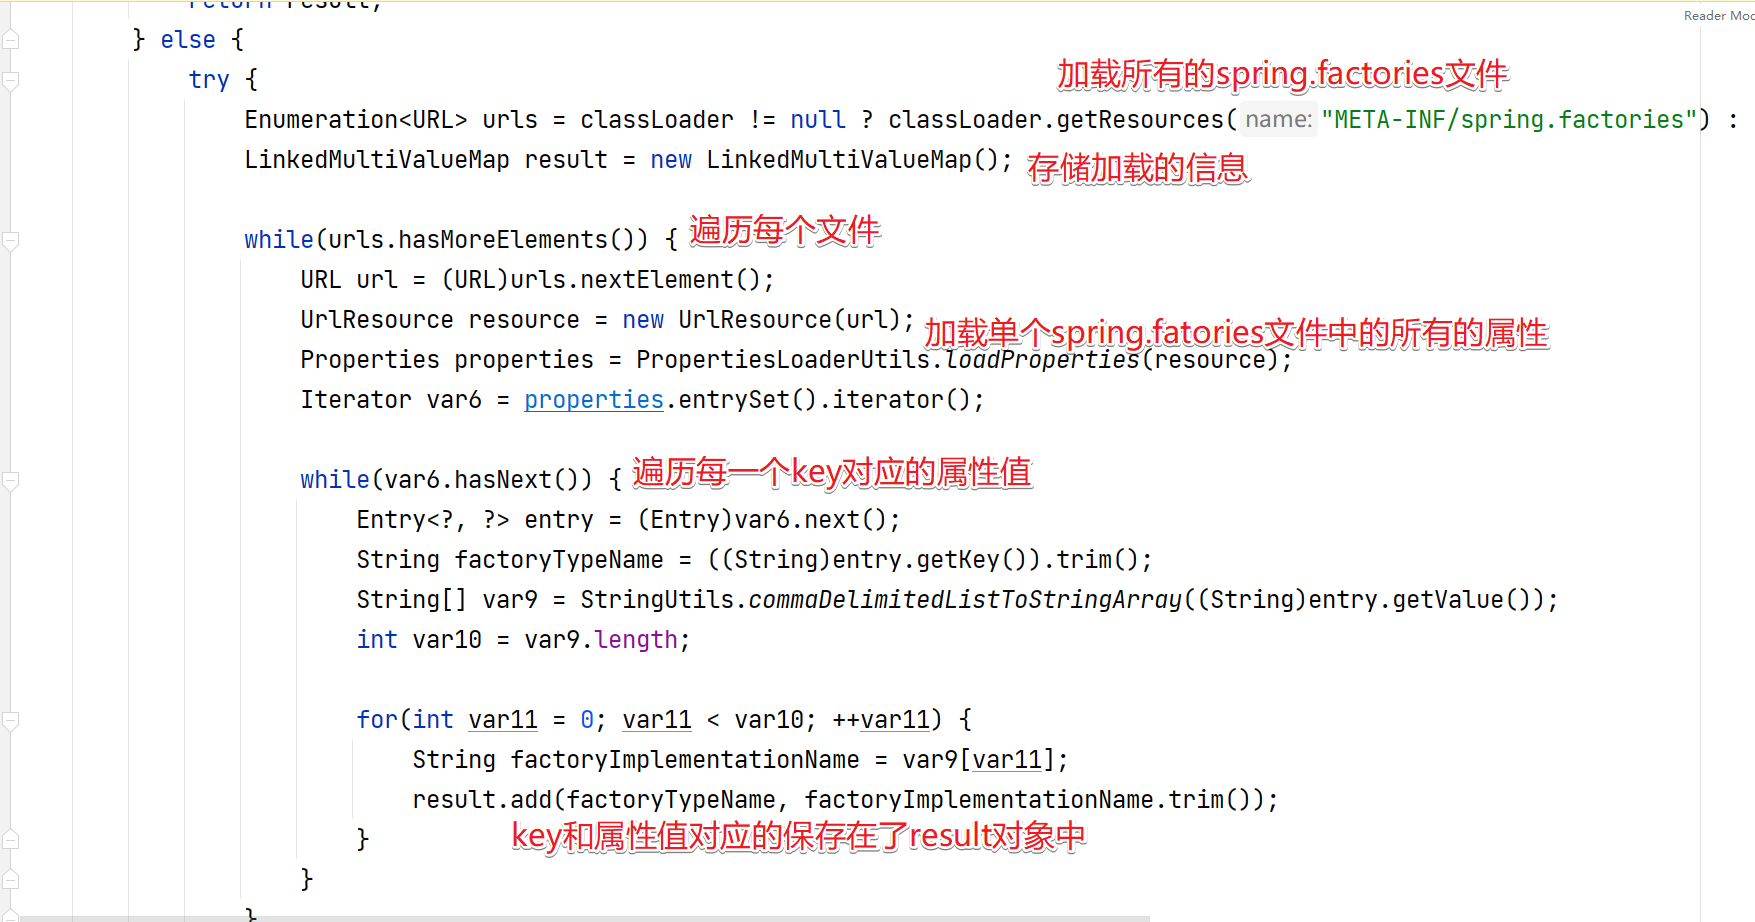 SpringBoot源码分析之SpringApplication构造方法核心源码分析-鸿蒙开发者社区